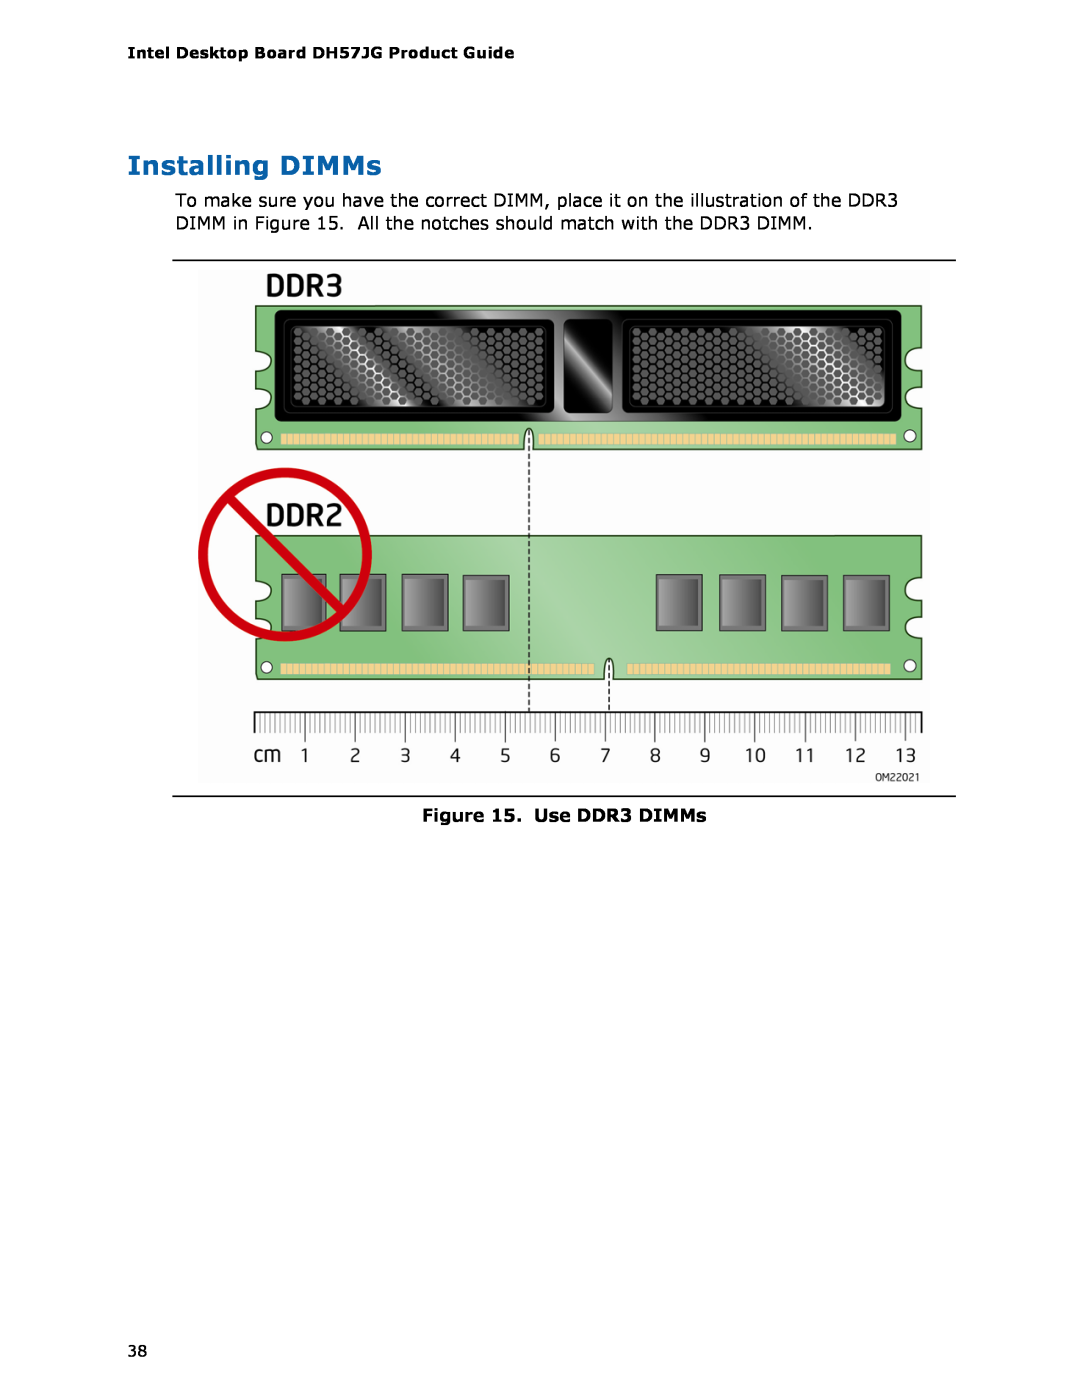 Intel BLKDH57JG manual Installing DIMMs, Use DDR3 DIMMs, Intel Desktop Board DH57JG Product Guide 